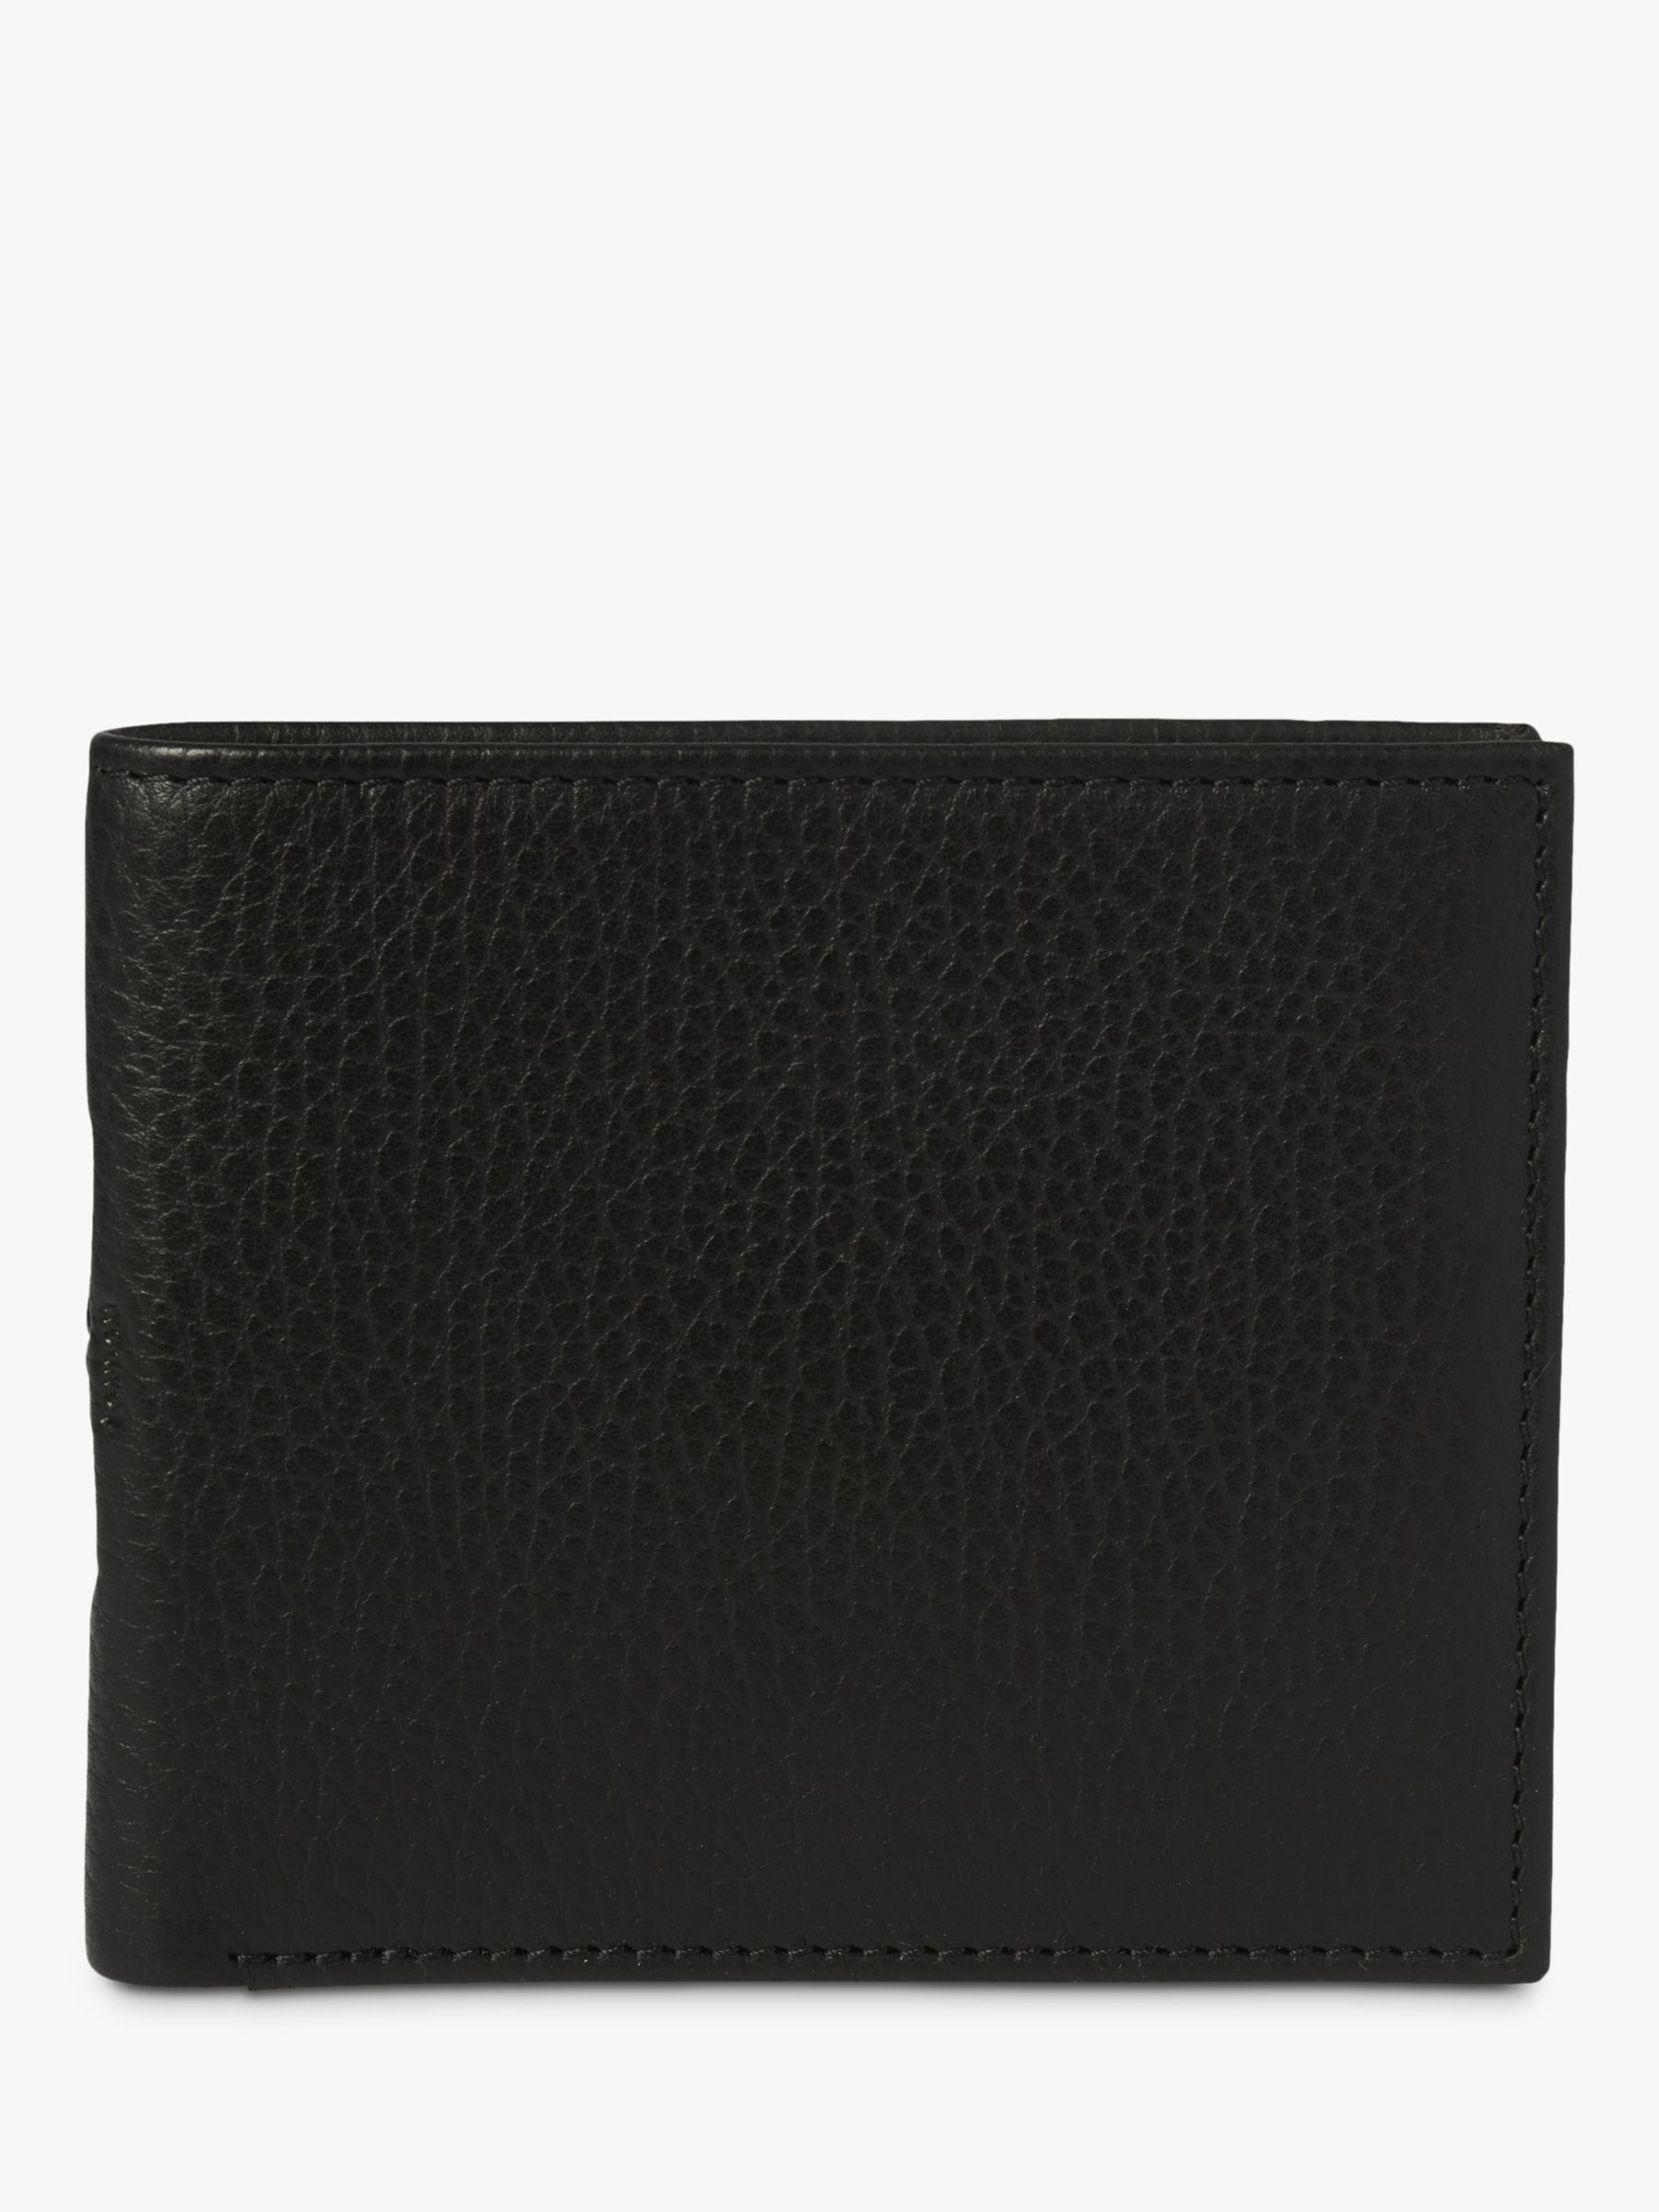 Simon Carter West End Leather Wallet, Black at John Lewis & Partners